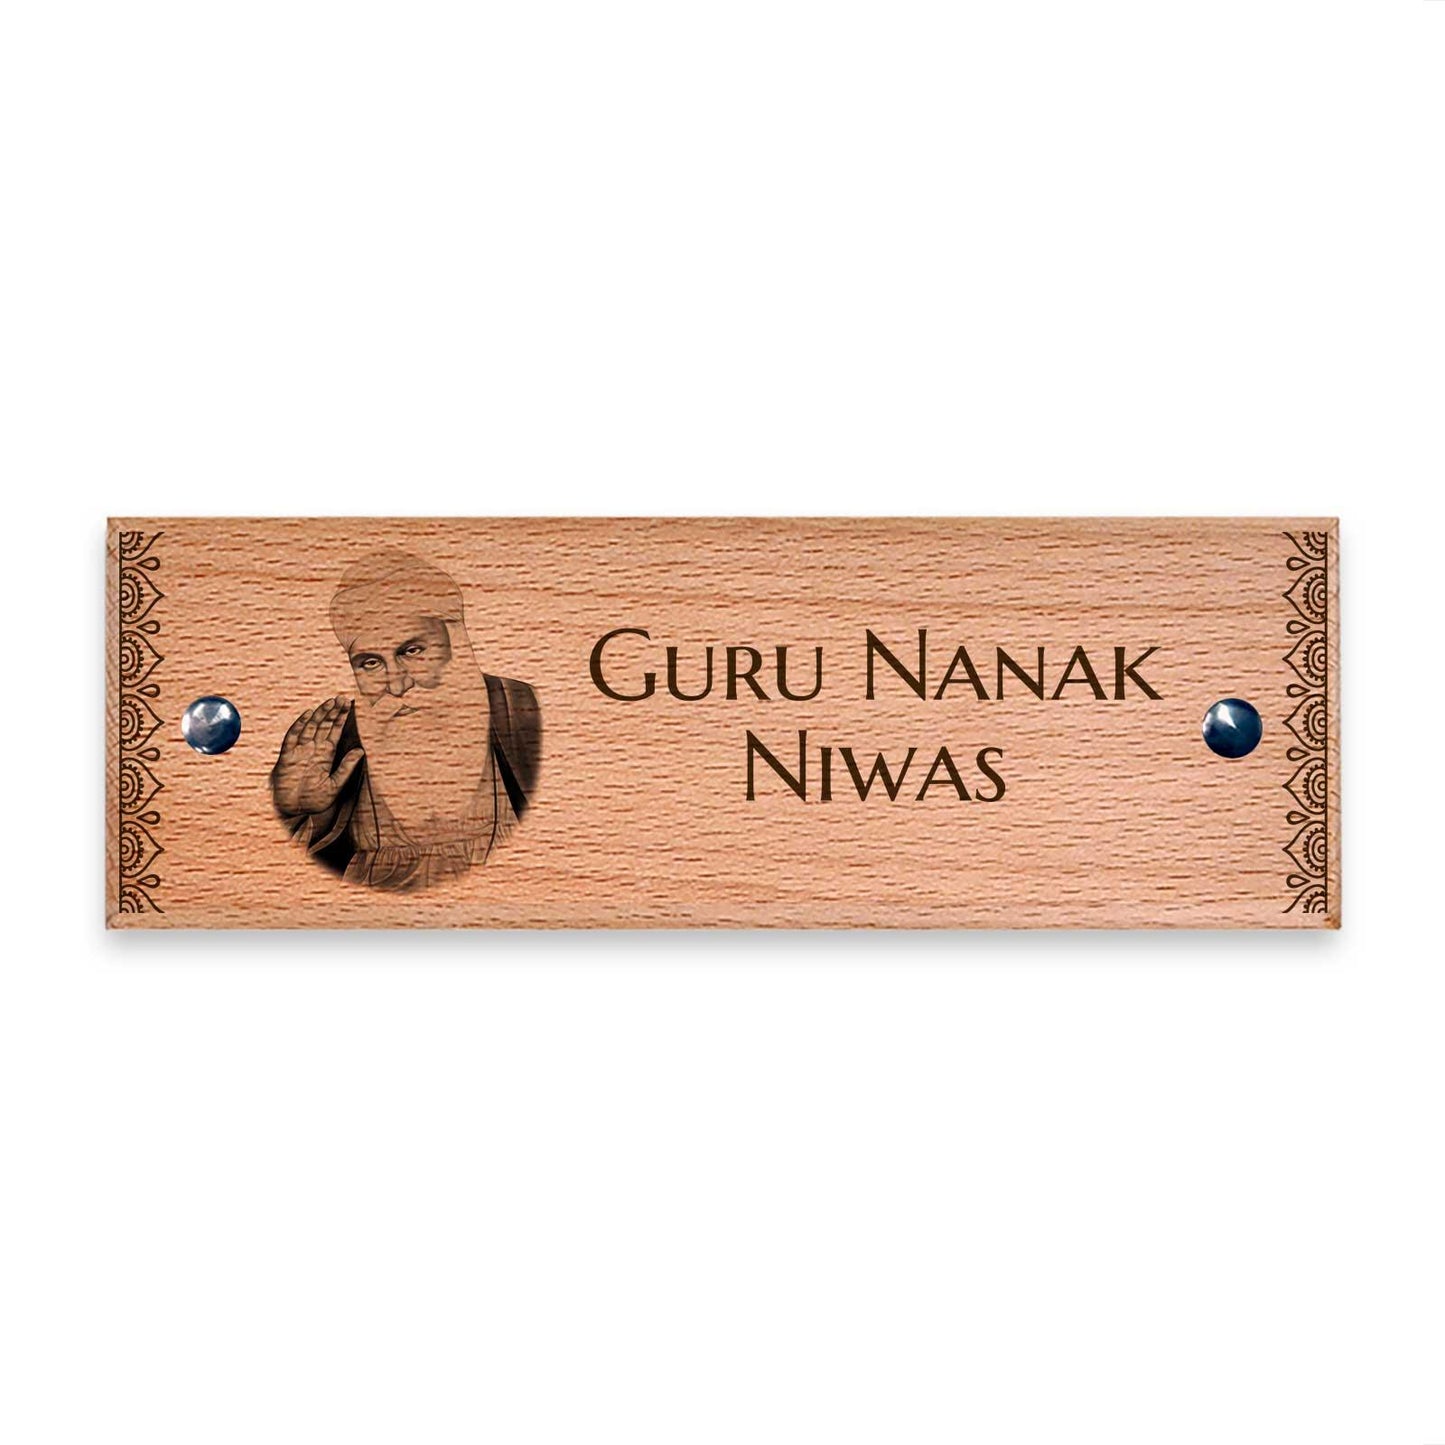 Guru Nanak - Wooden Name Plate - Housenama